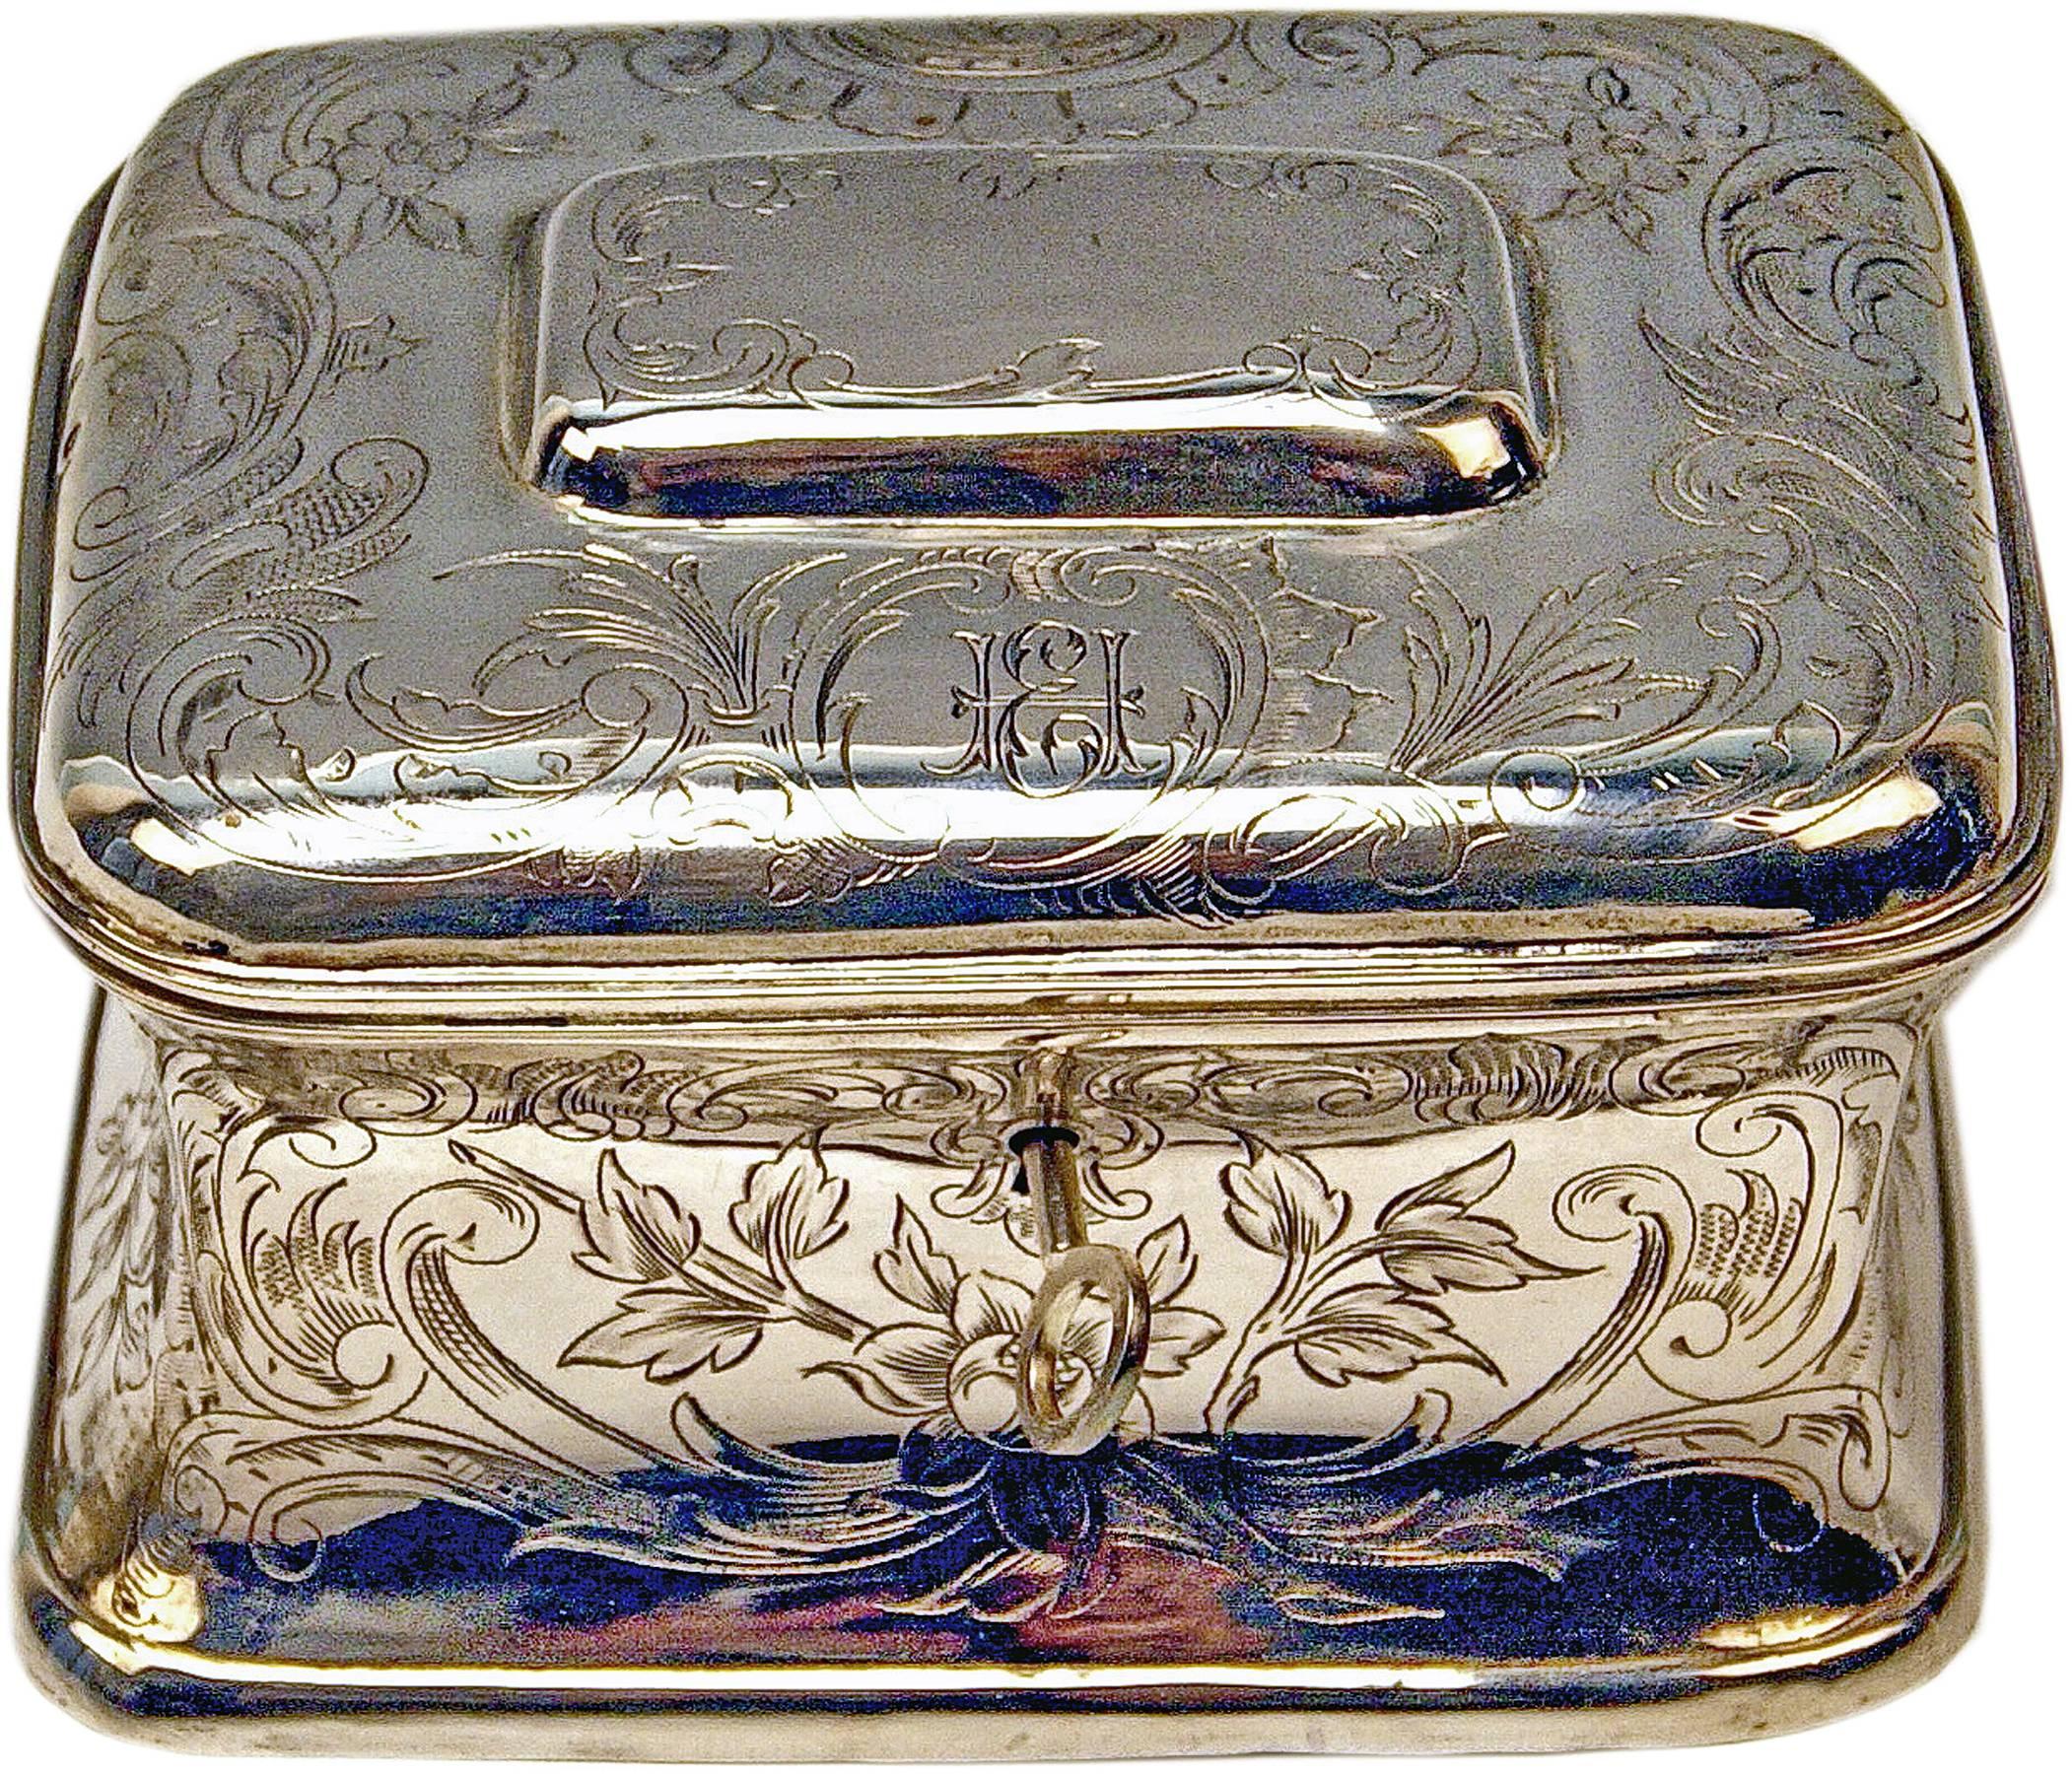 Early 20th Century Austrian Silver Sugar Box like Chest with Key, circa 1900